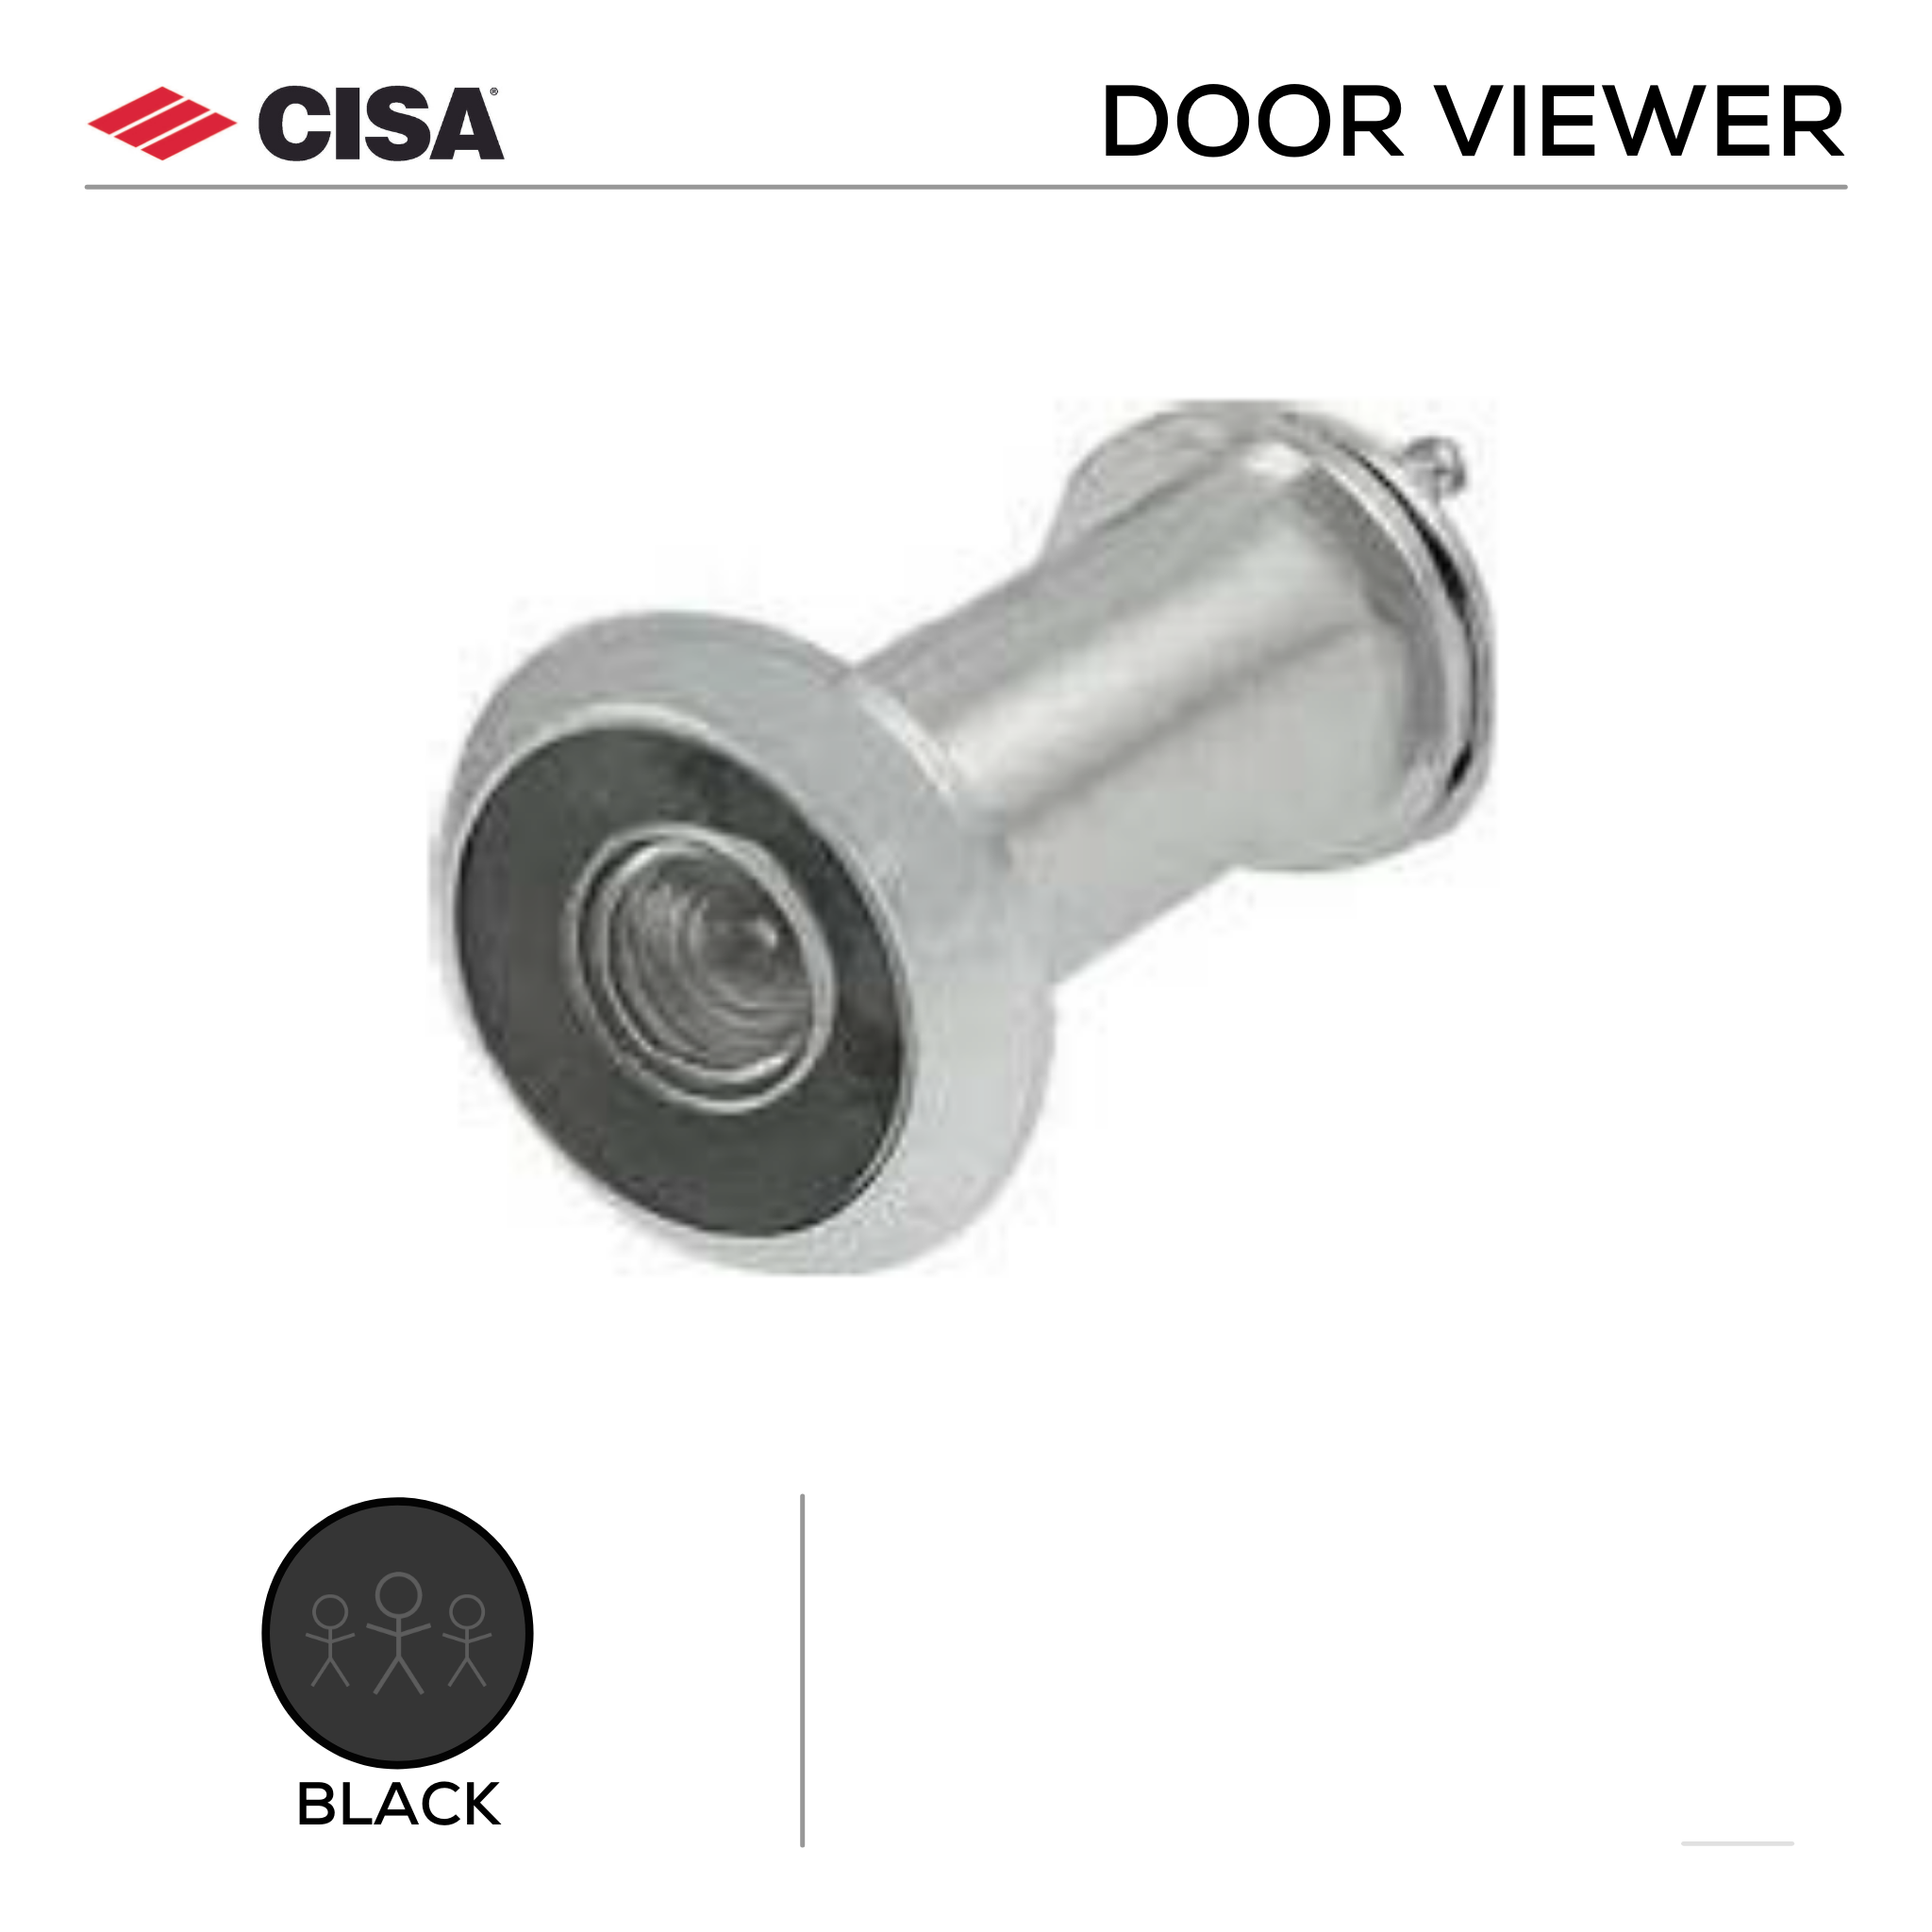 FDV1.BL, Door Viewer, 40-44mm (l), 180º View, Black, CISA